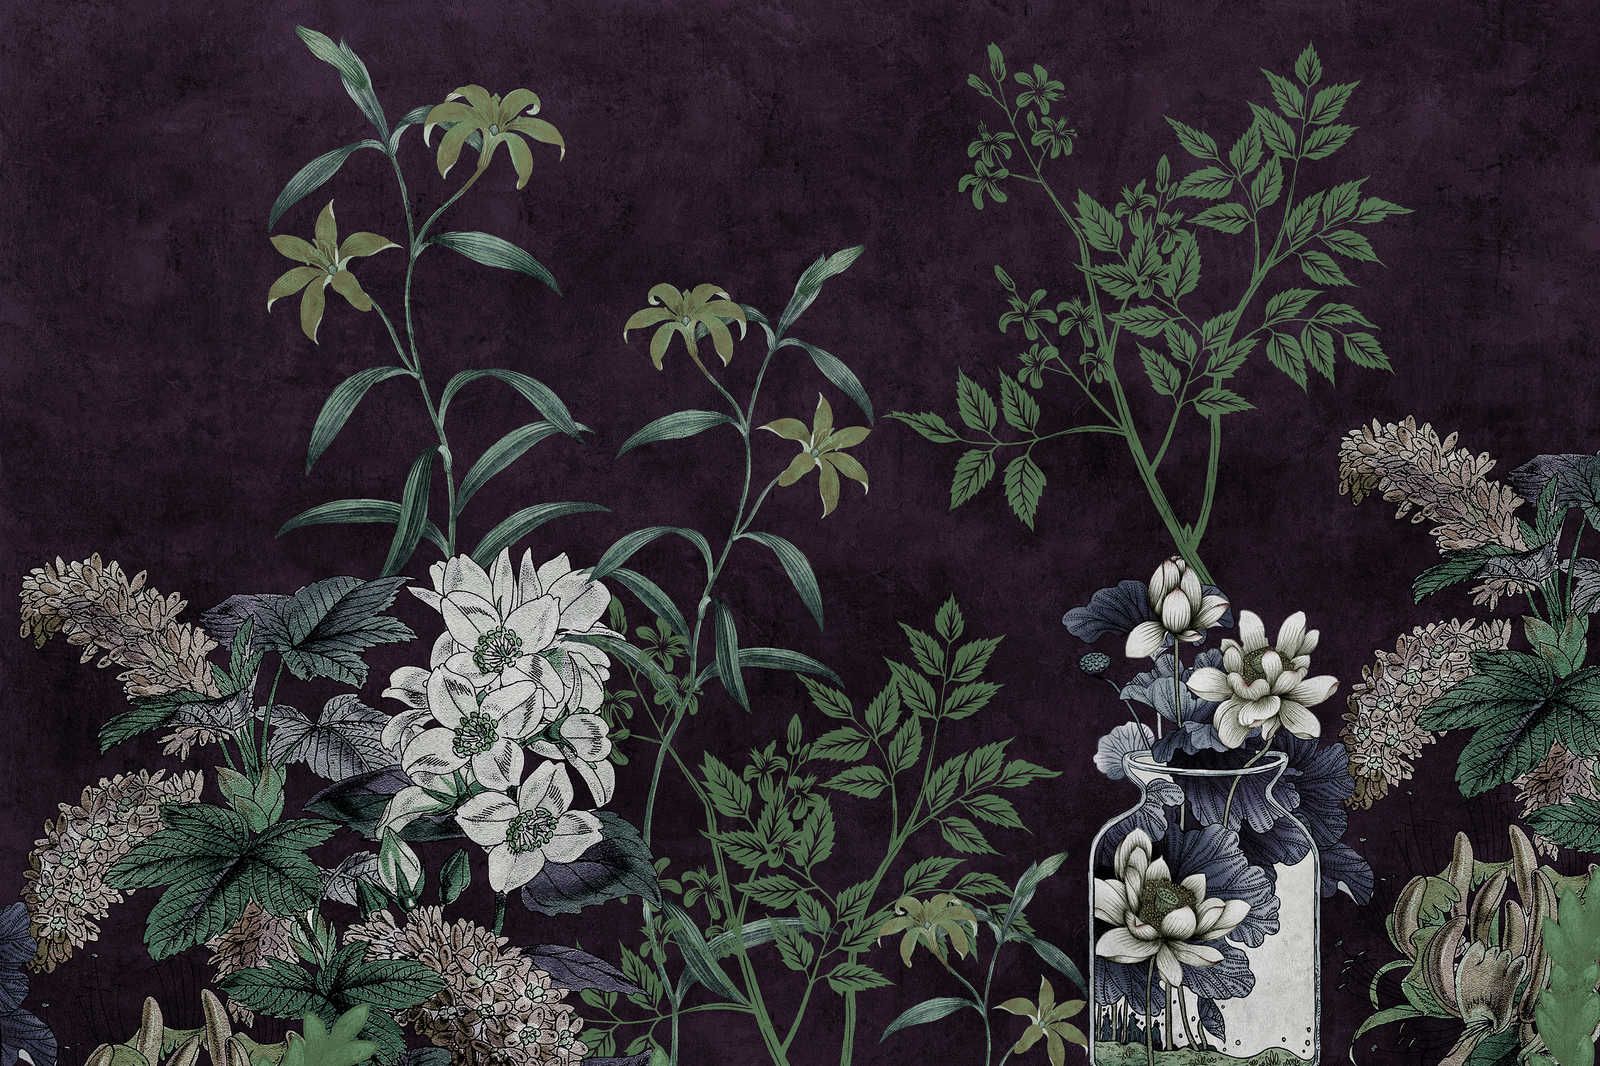             Dark Room 1 - Black Canvas Painting Botanical Pattern Green - 1.20 m x 0.80 m
        